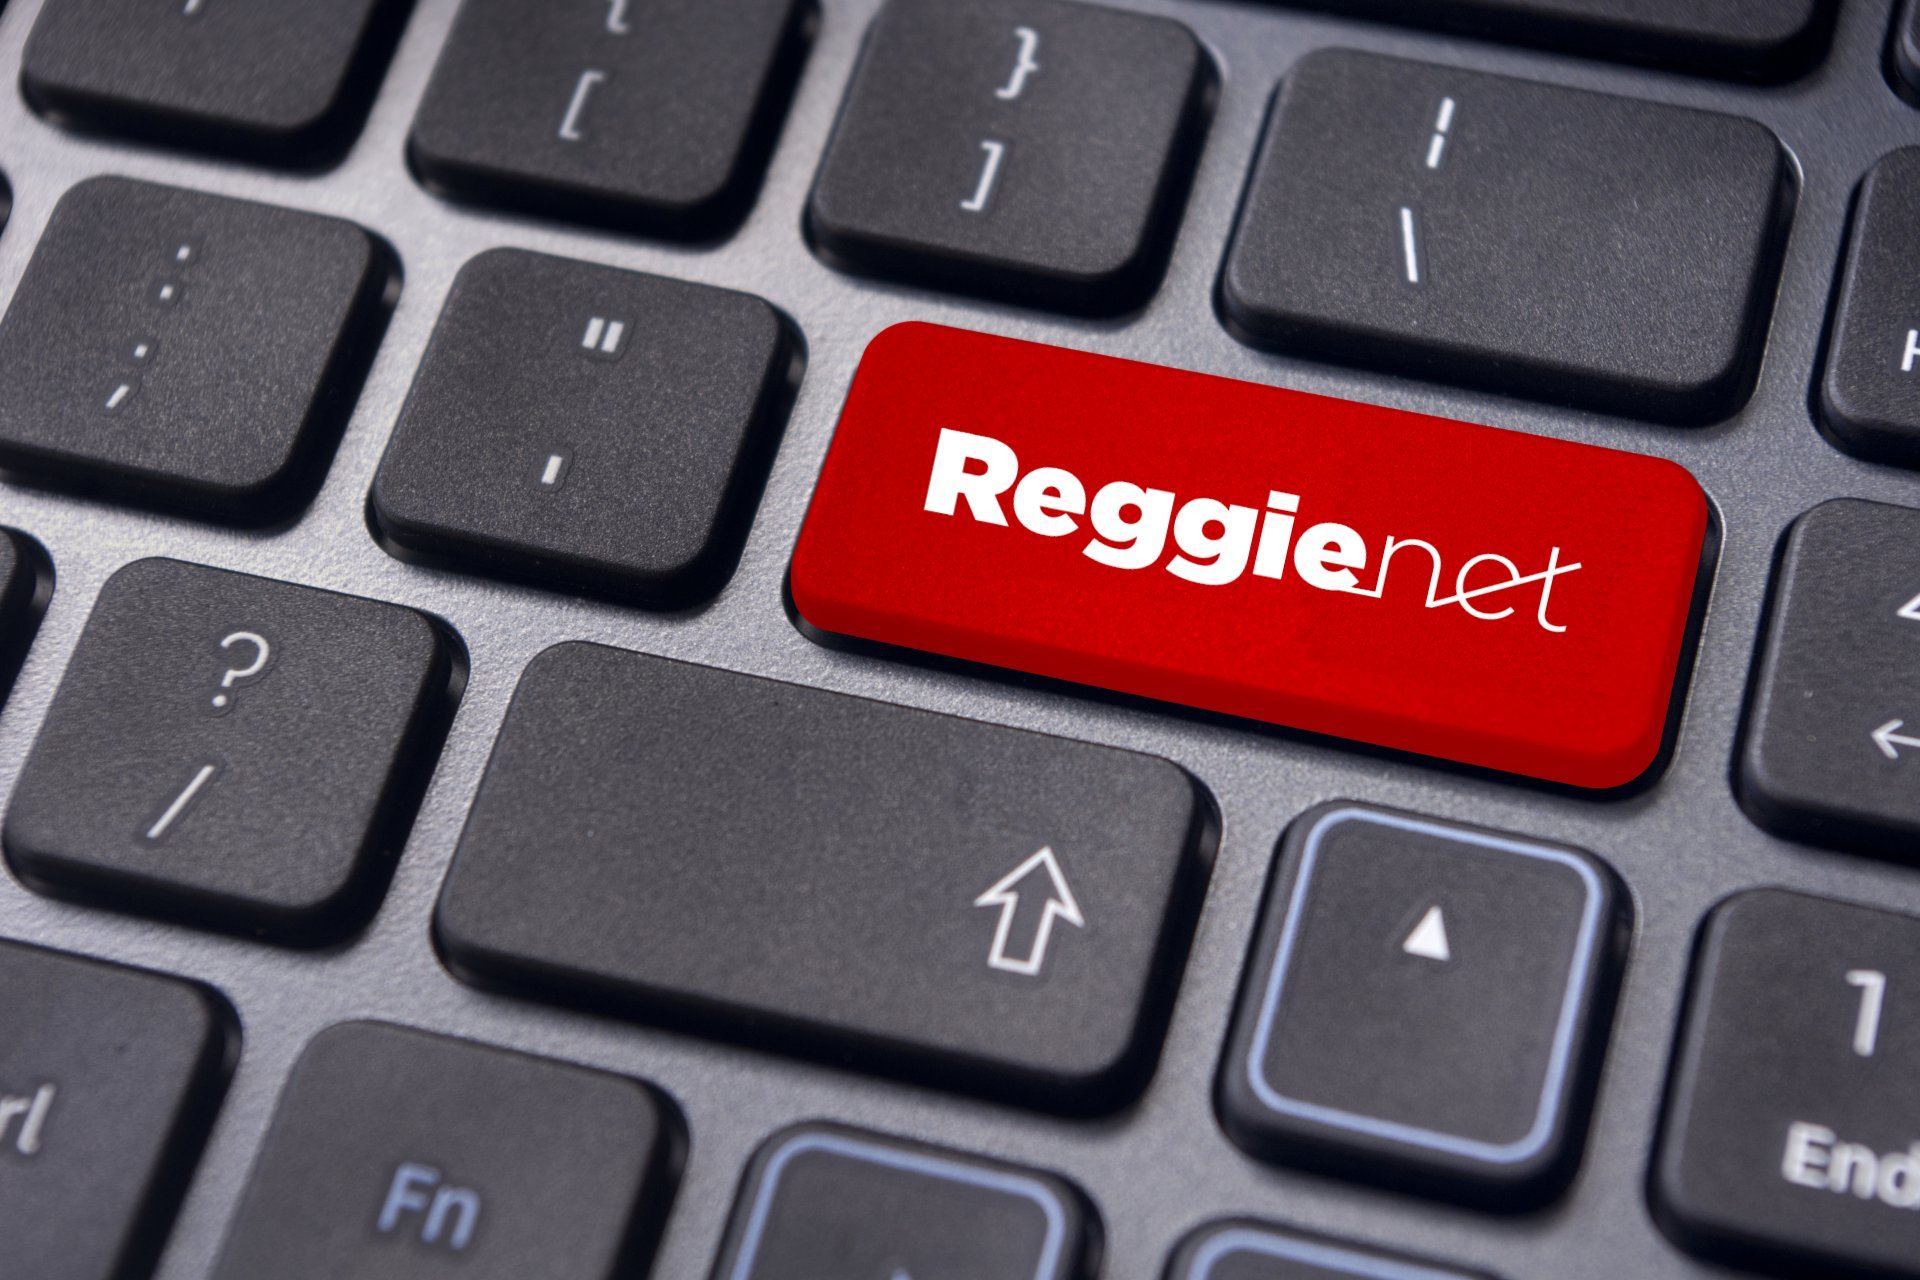 Explore ReggieNet replacements, April 26 and 28 - News - Illinois ...